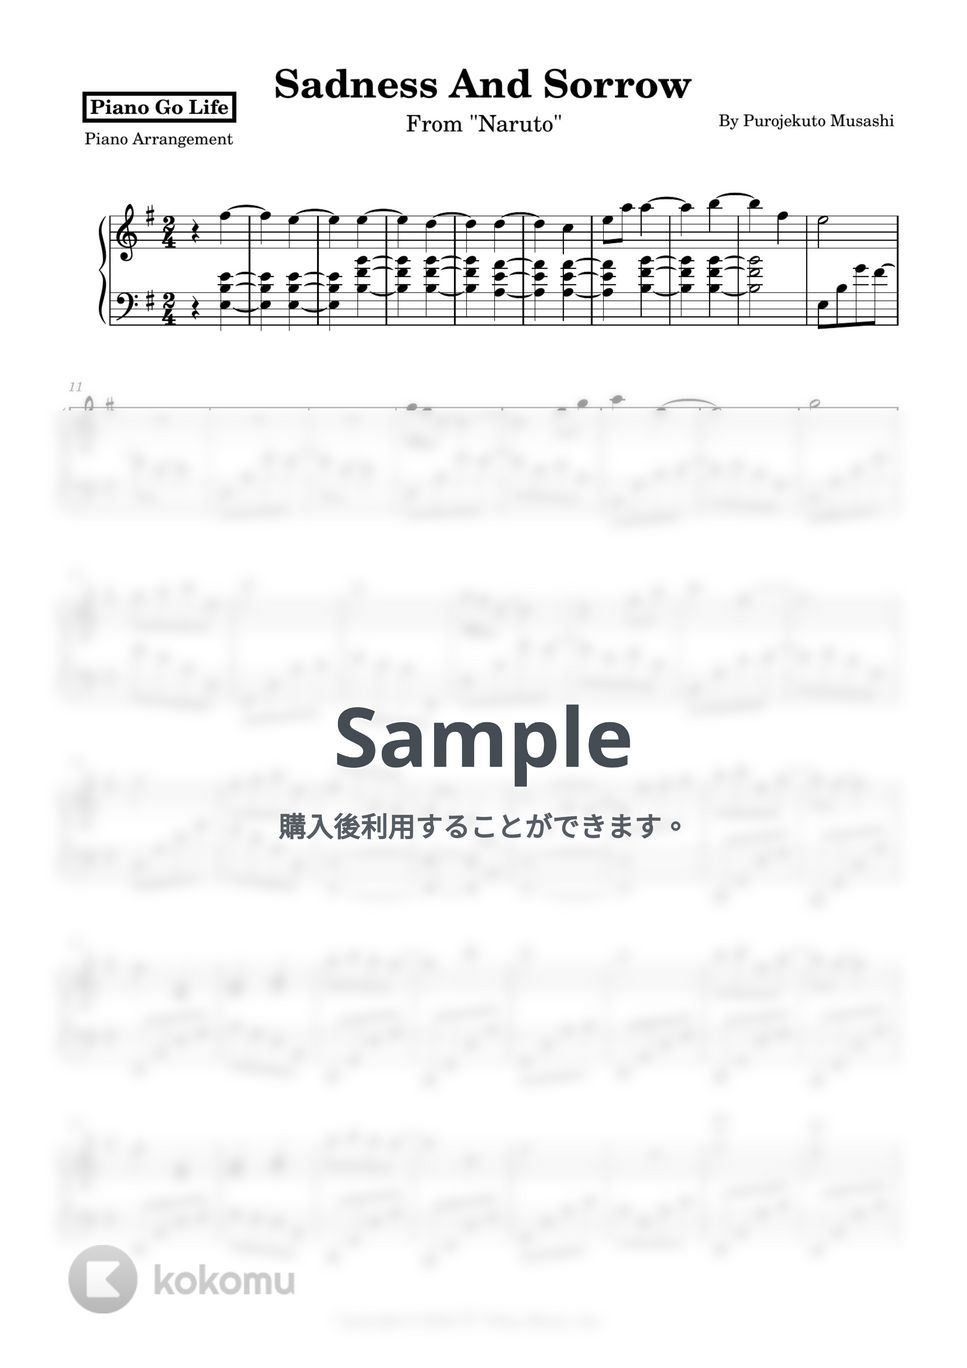 Toshio Masuda - Sadness And Sorrow (Naruto) by Piano Go Life